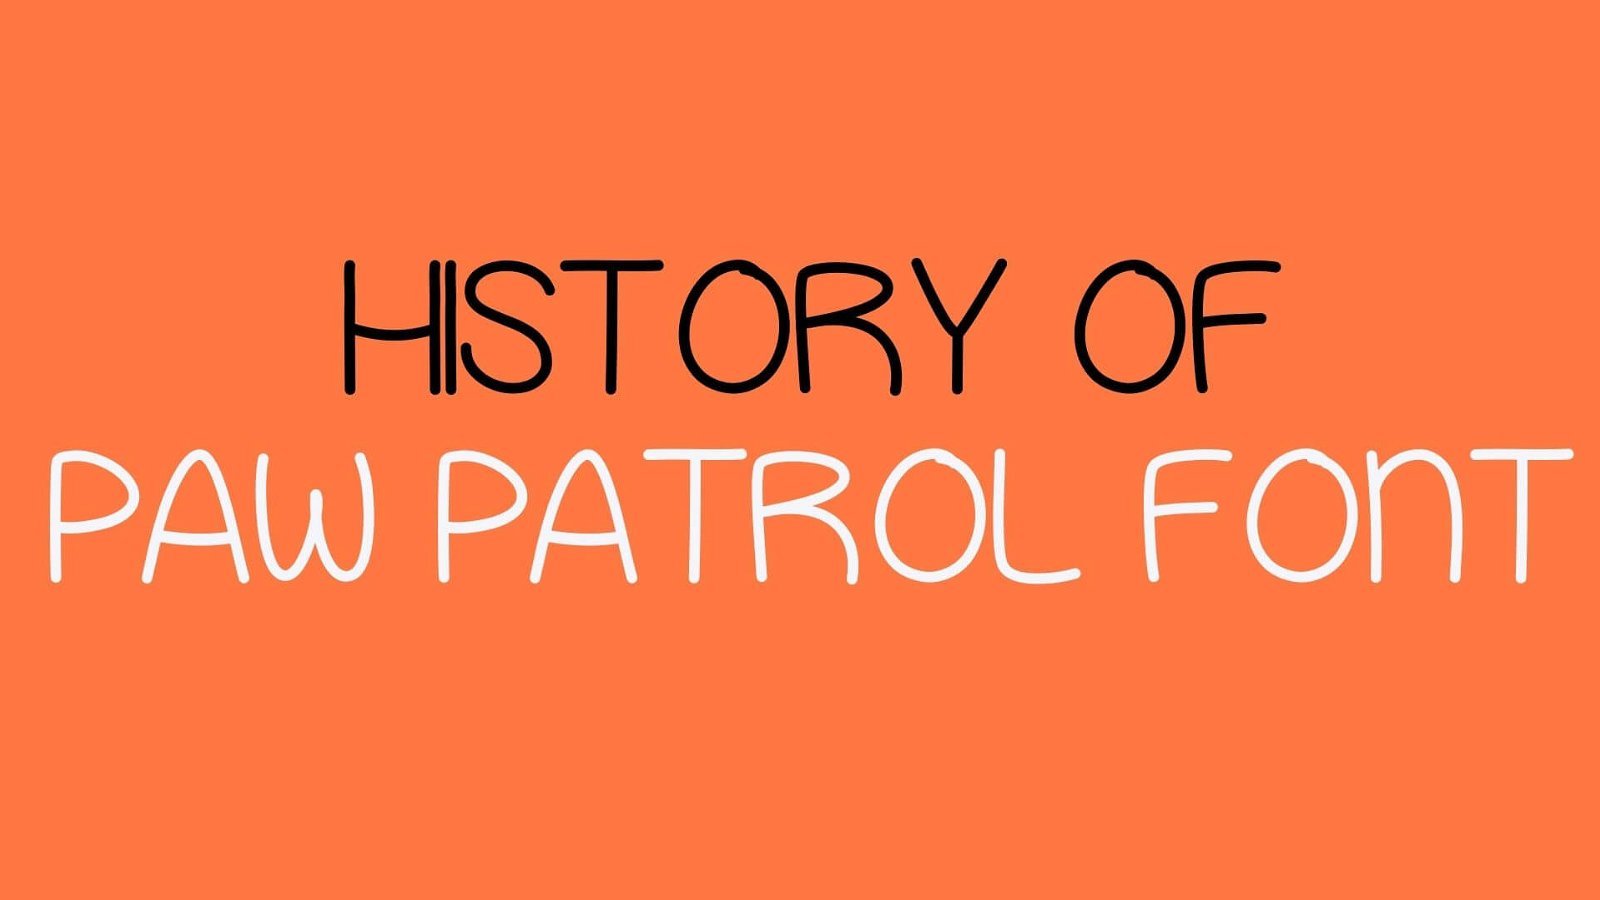 History of Paw Patrol Font